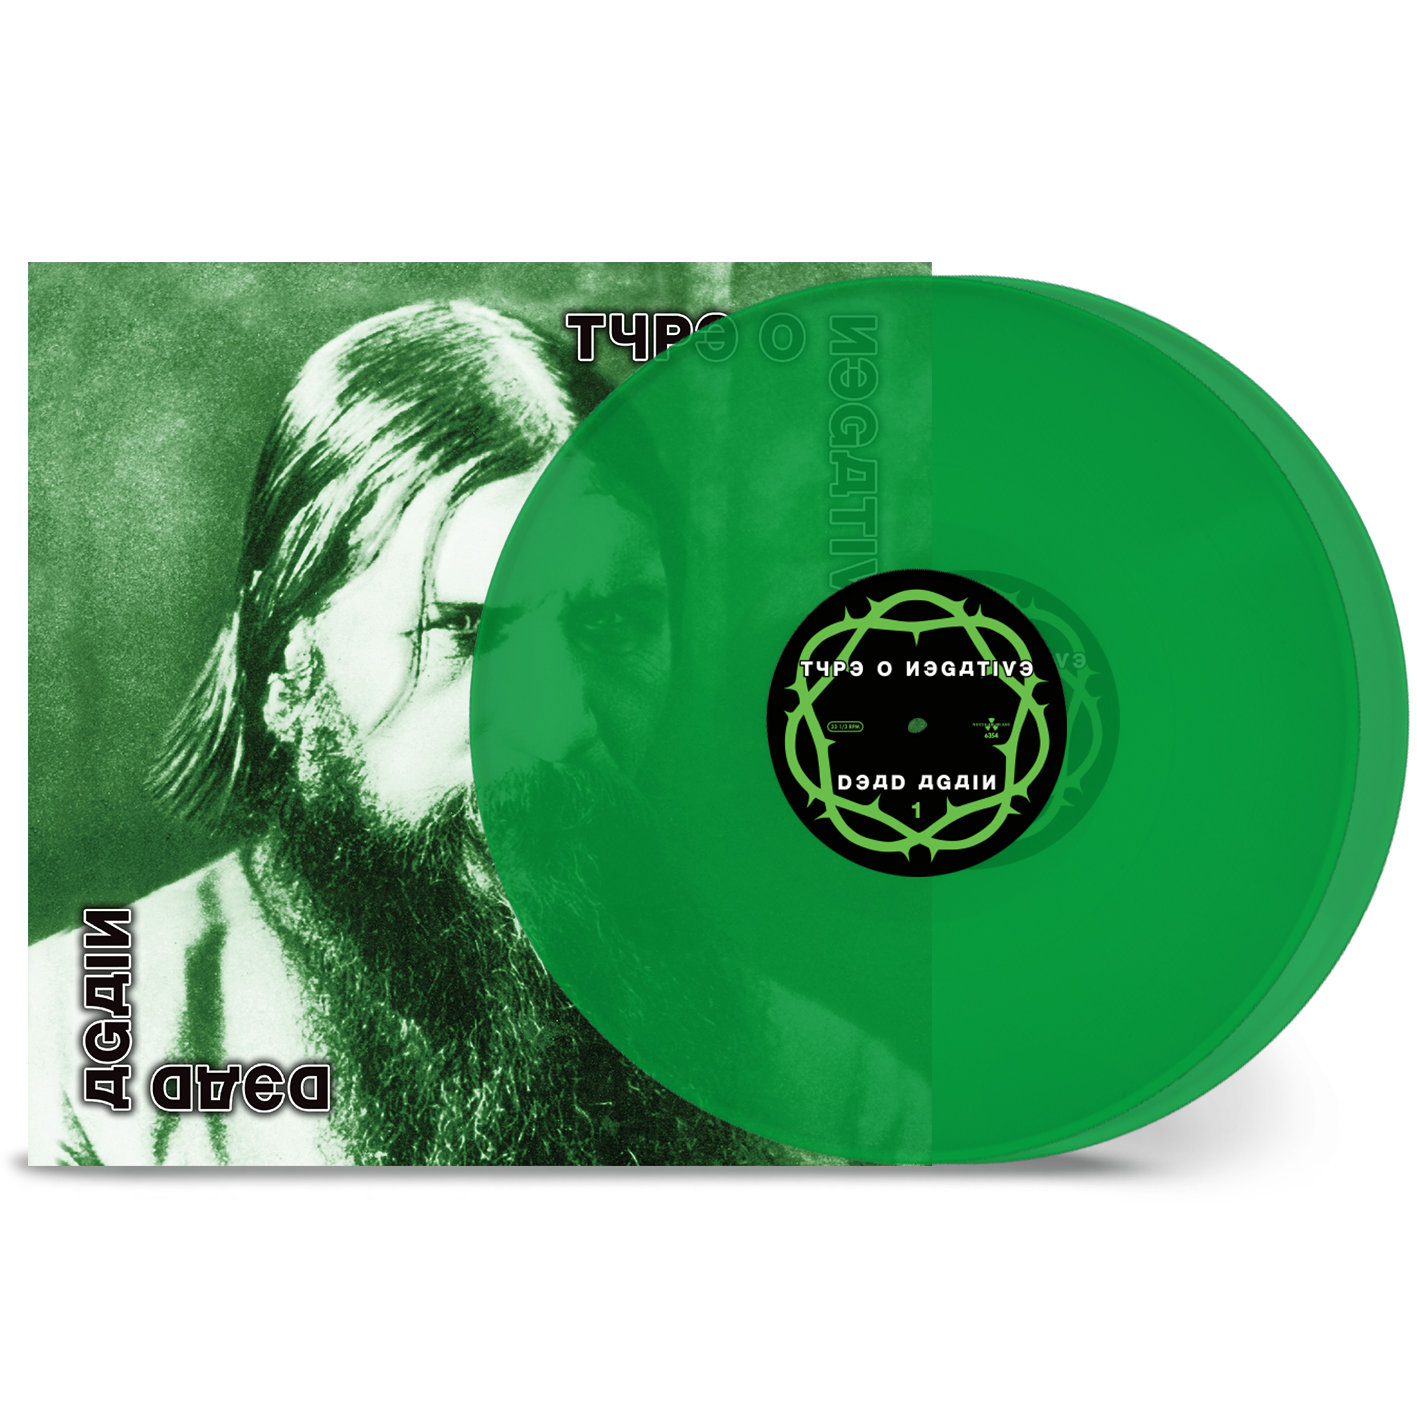 Type O Negative - Dead Again: Limited Edition Light Green Vinyl 2LP